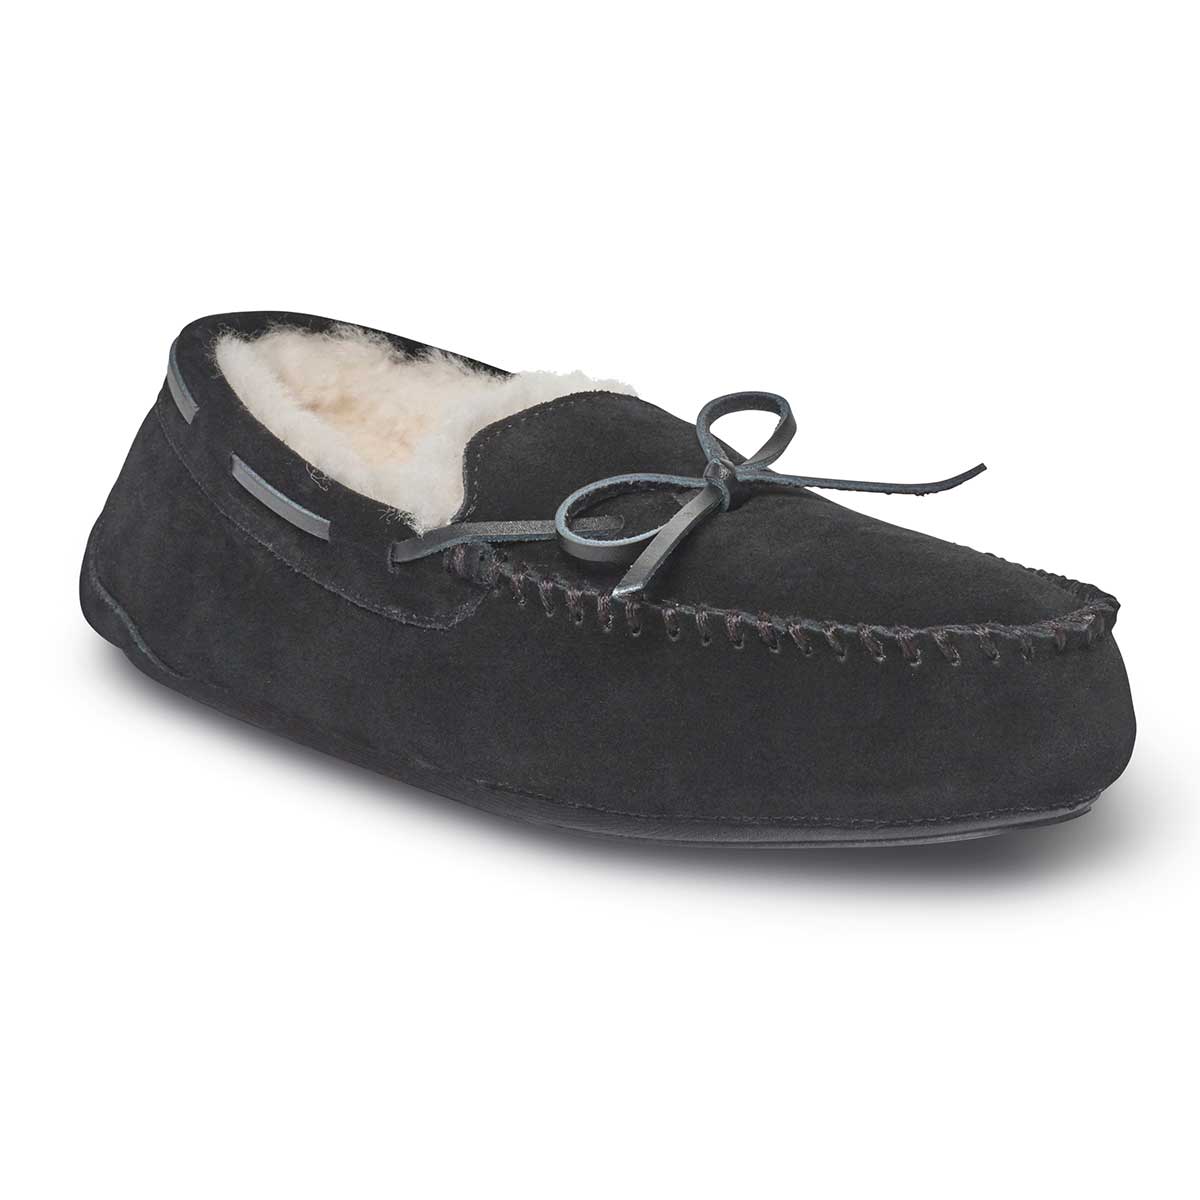 Mens Torrington Sheepskin Slippers | Just Sheepskin Slippers and Boots